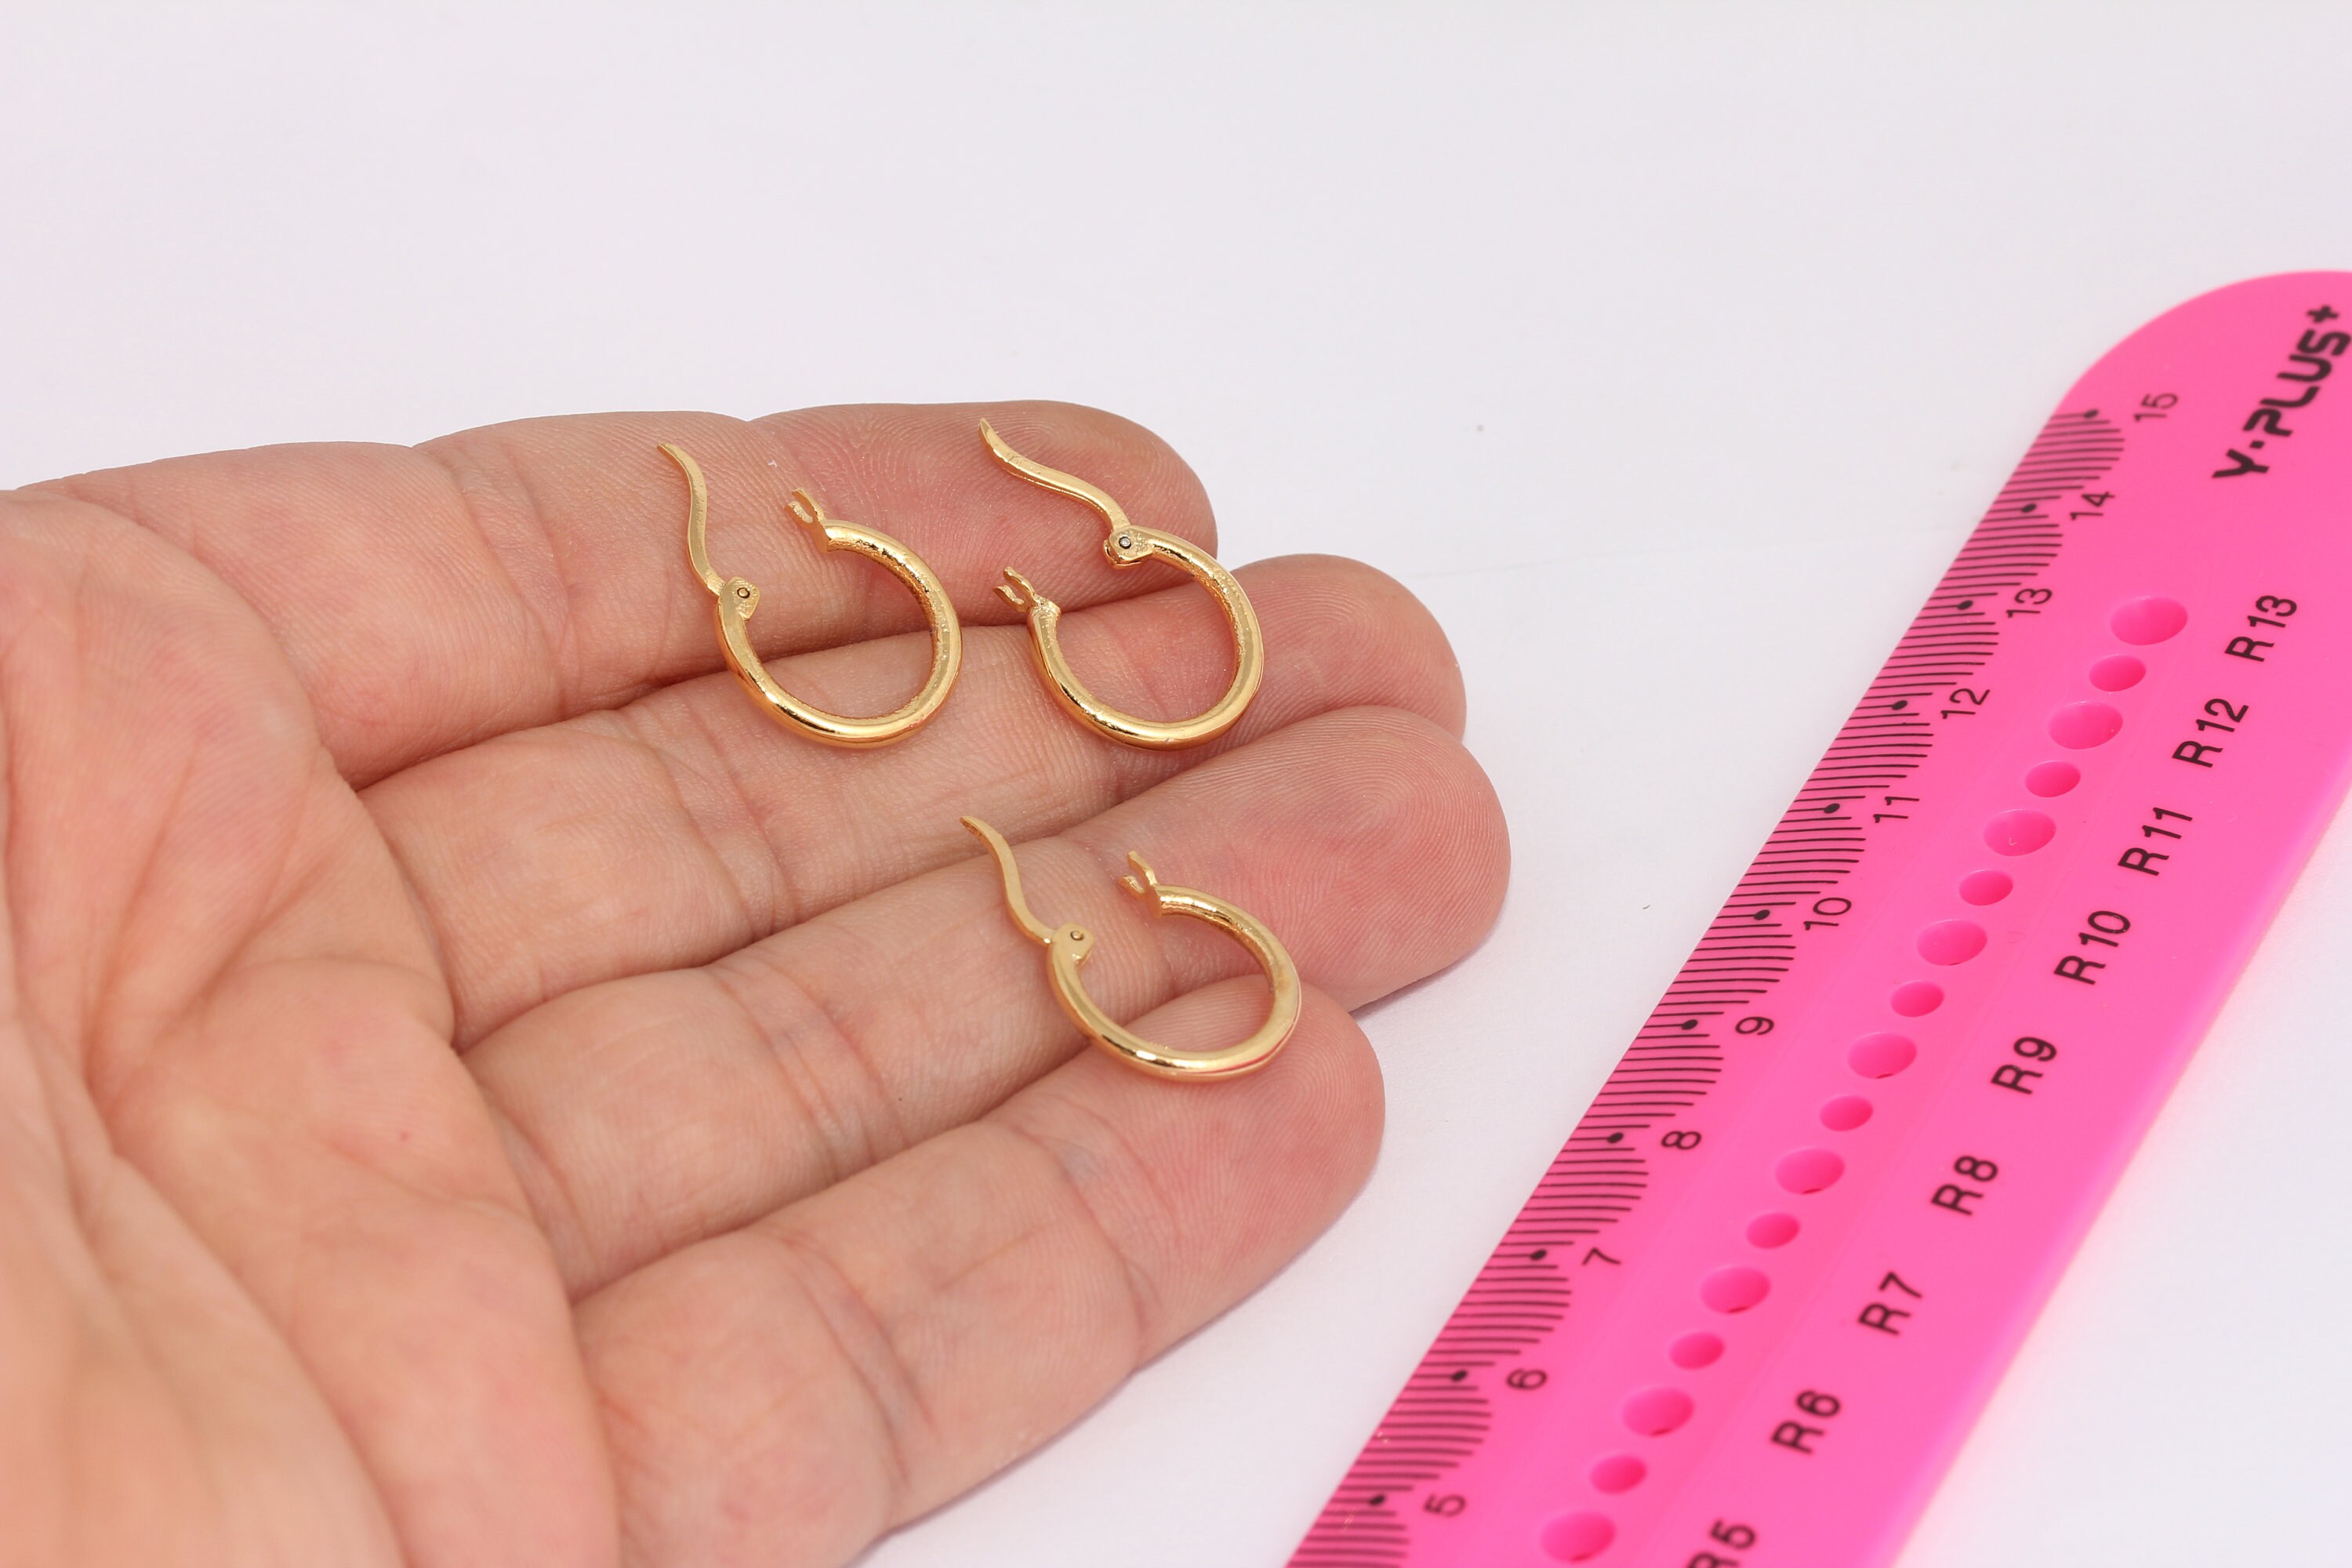 Wholesale BENECREAT 2 PCS 14K Gold Filled Lever Back Earring Hooks Findings  Leverback Shell Earrings for DIY Jewelry Making - 17x11mm 